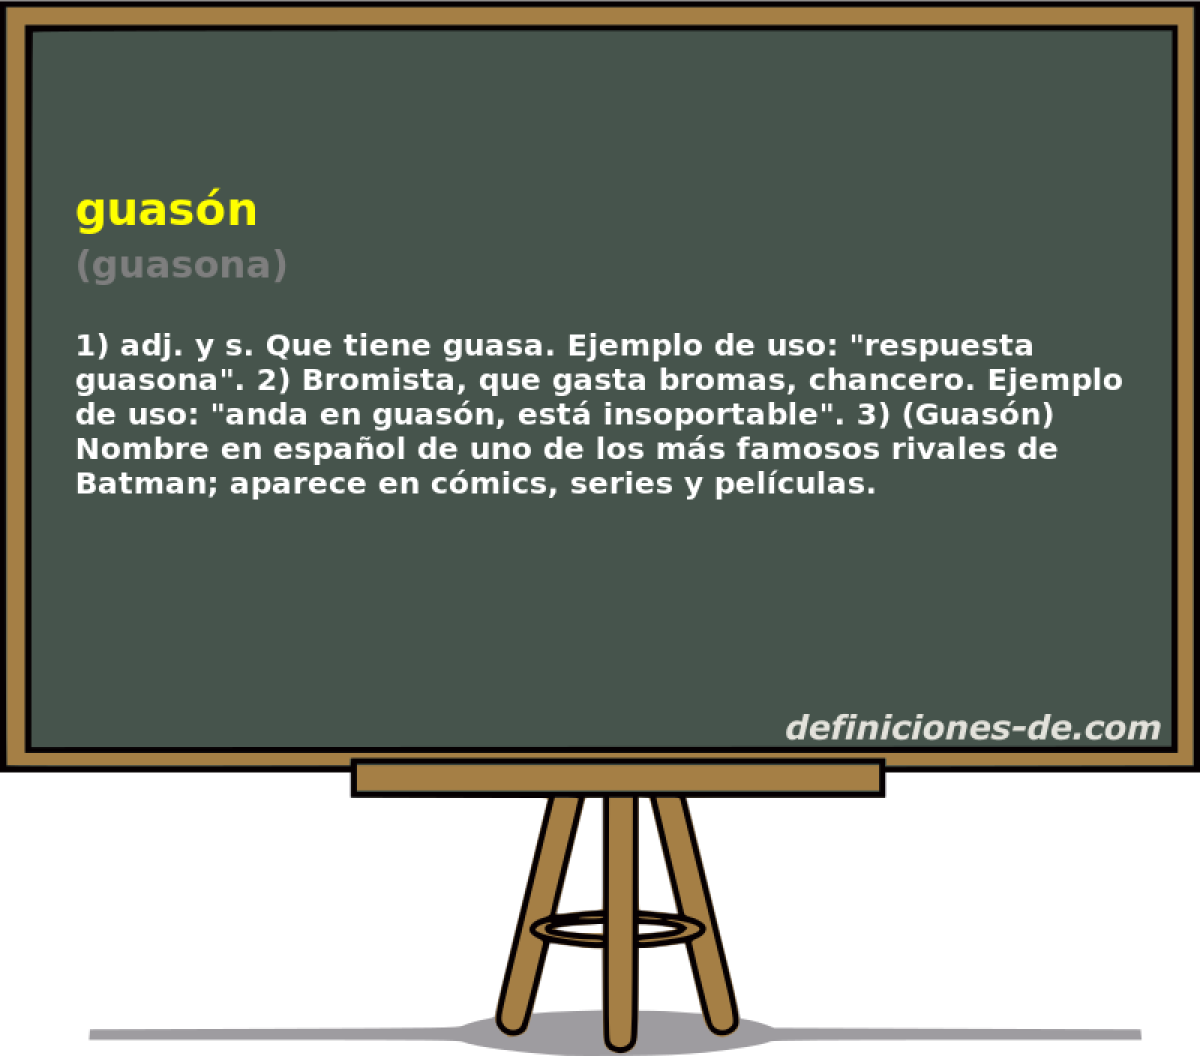 guasn (guasona)